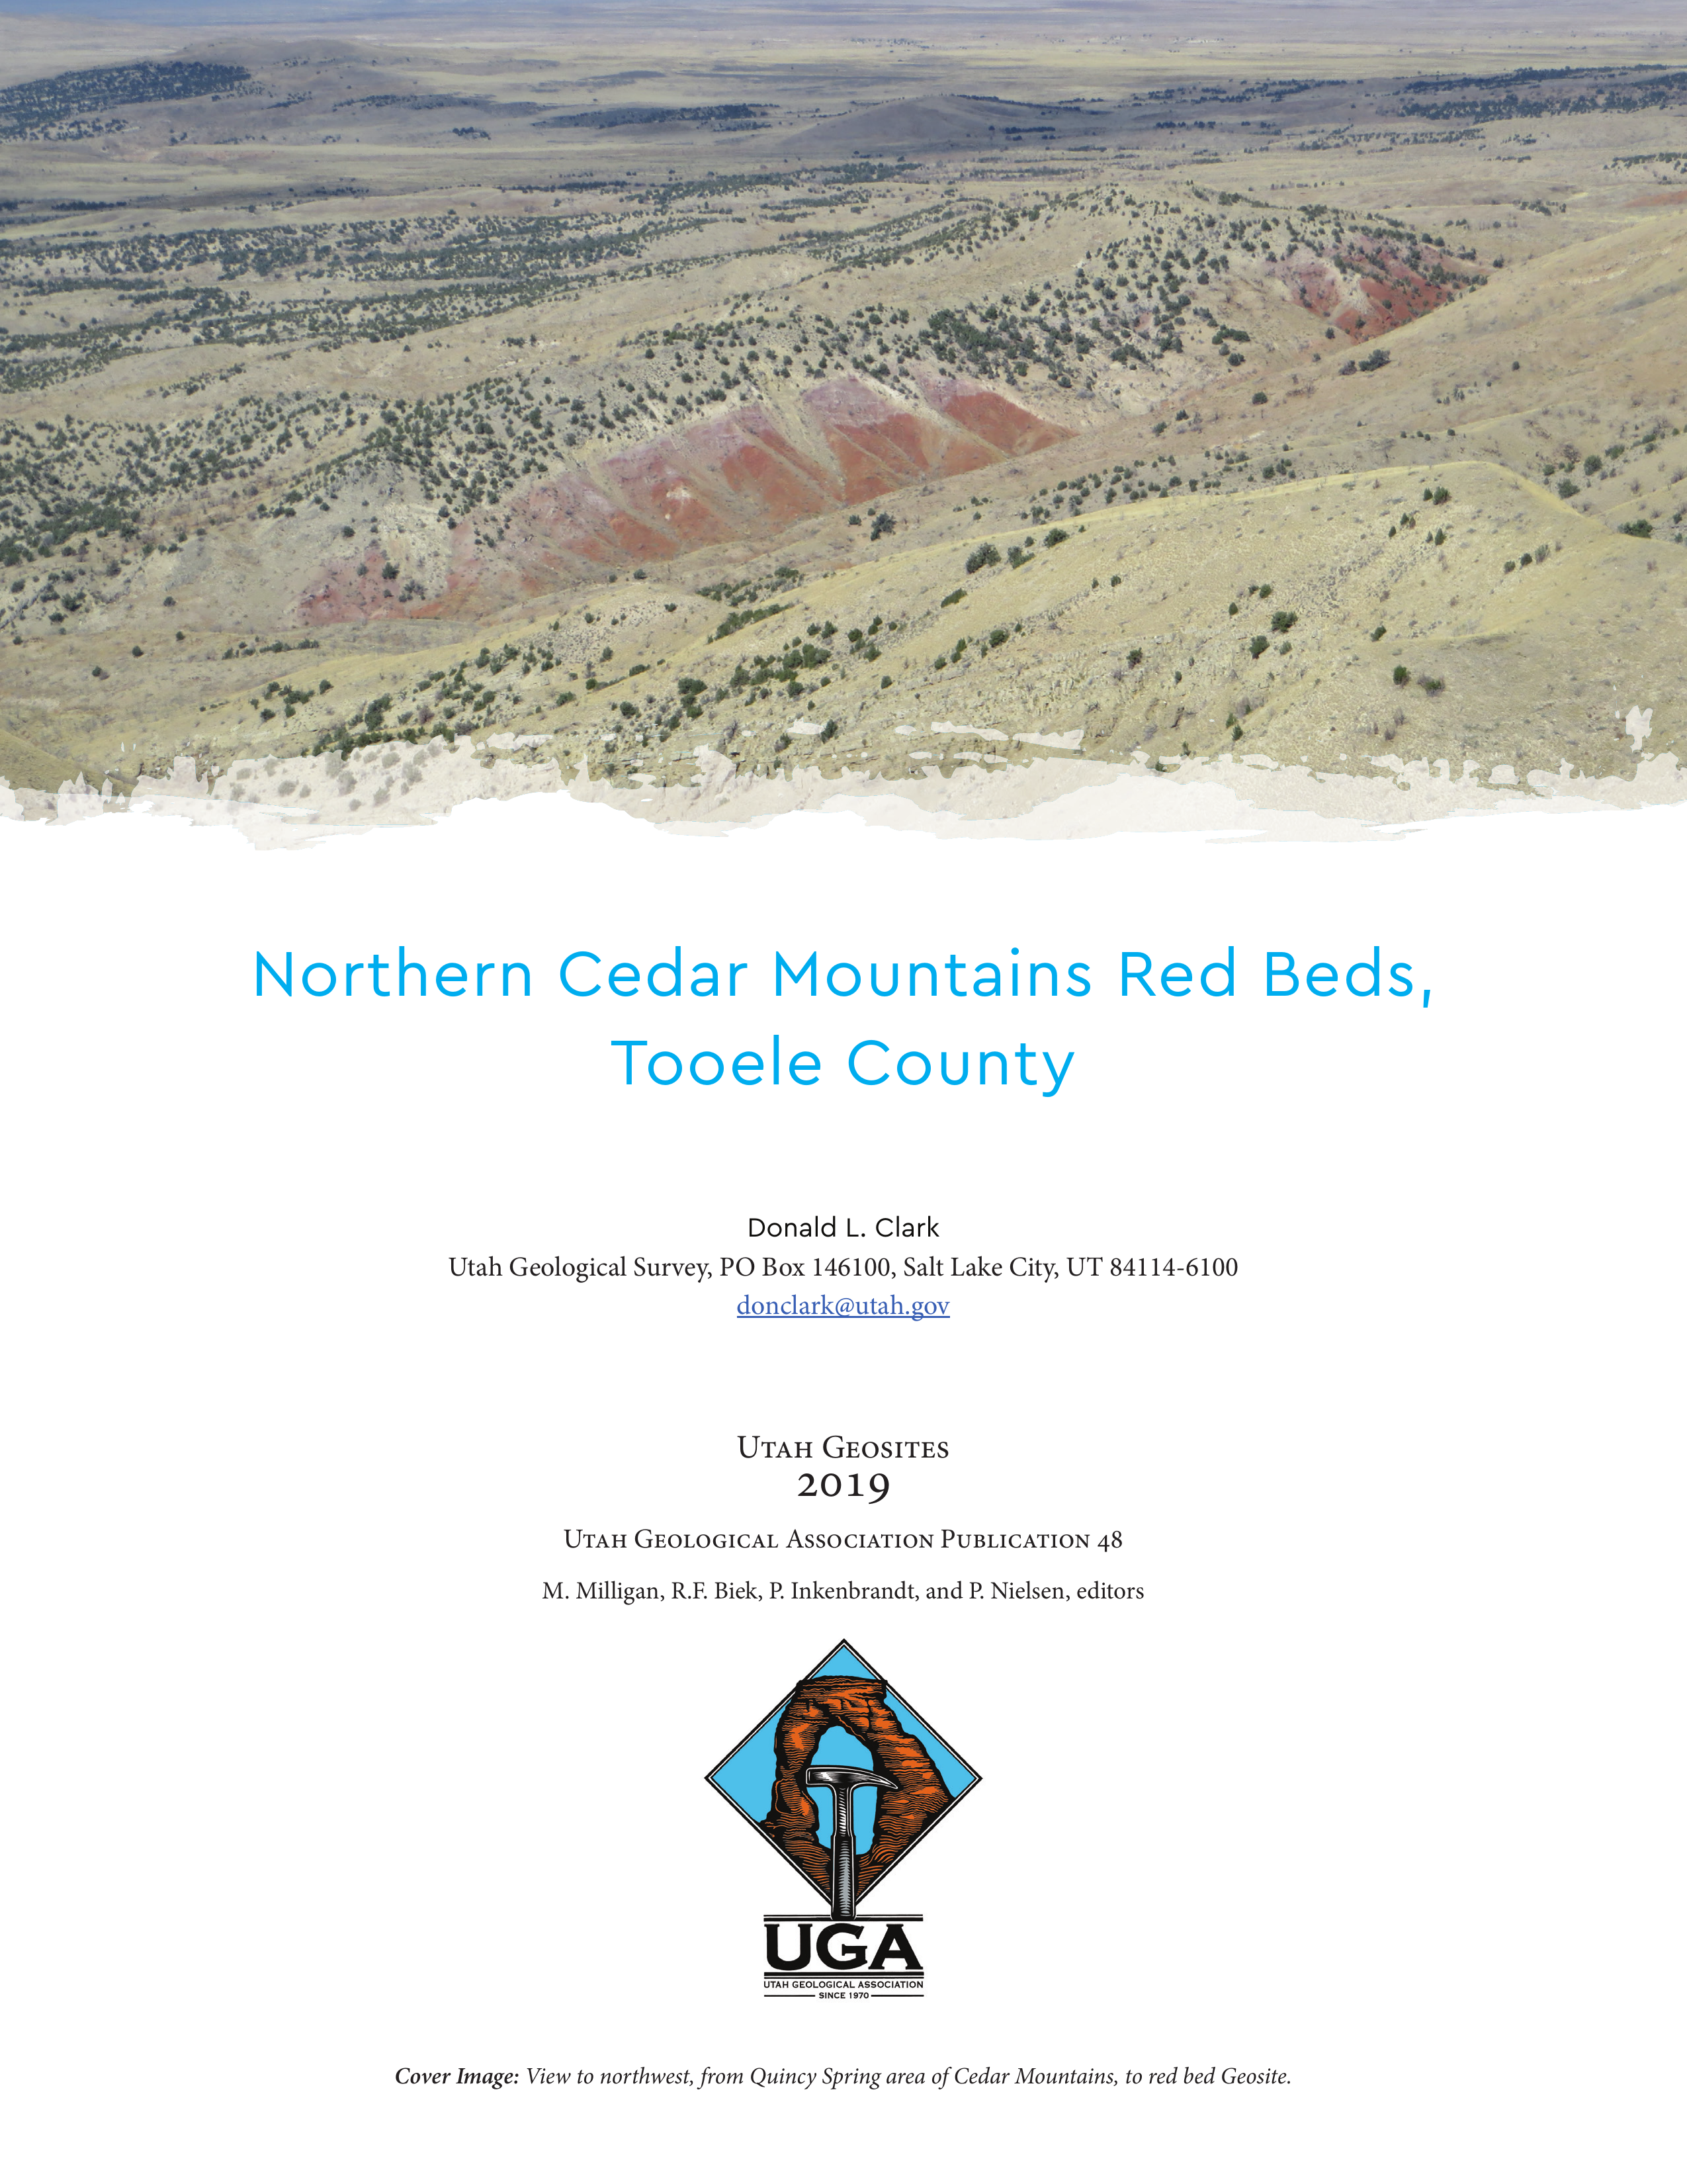 Cedar Mountain Red beds